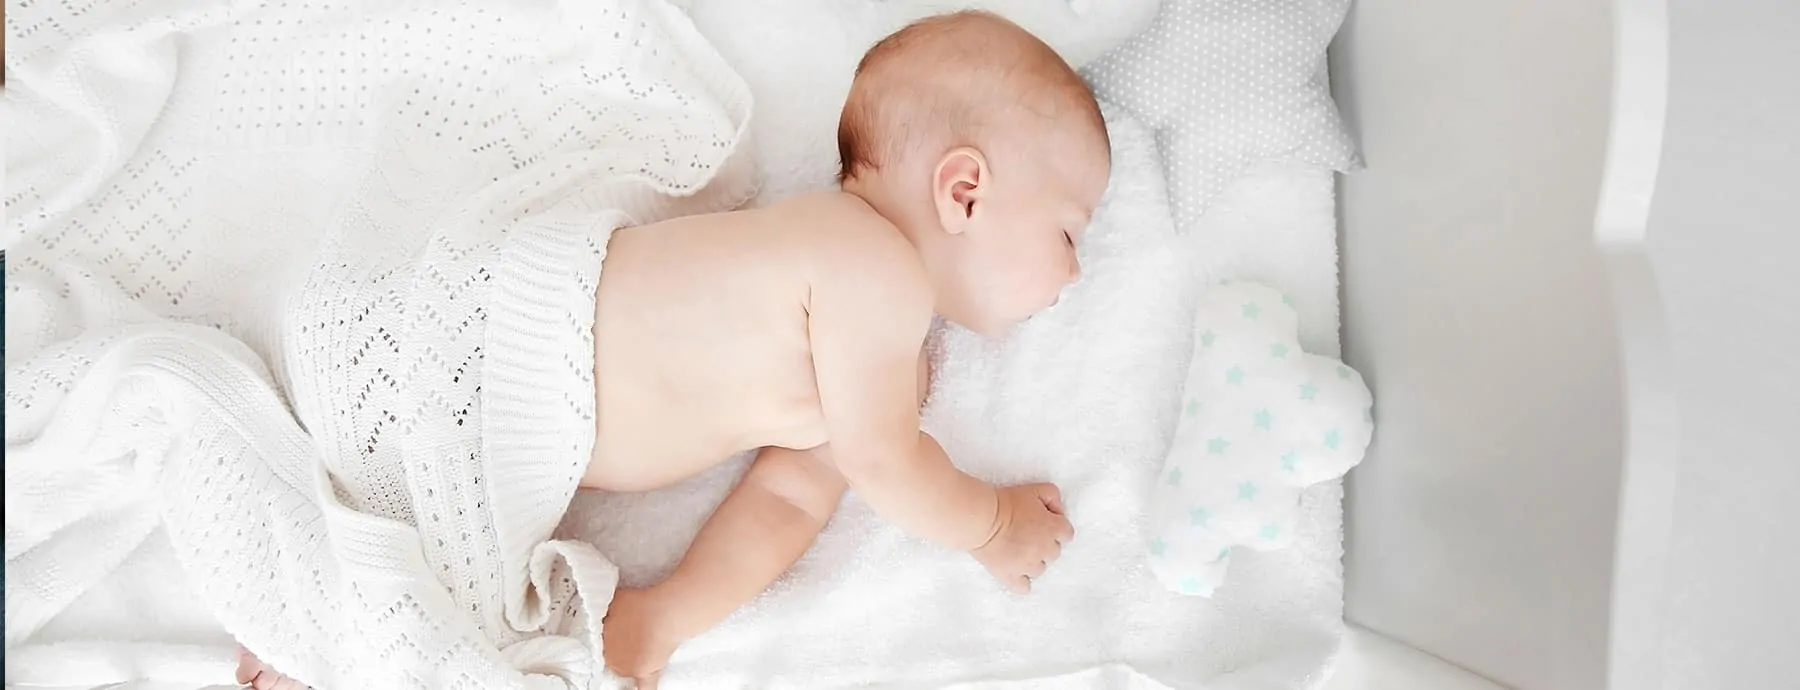 Do Babies Sleep Better in a Cooler Room?